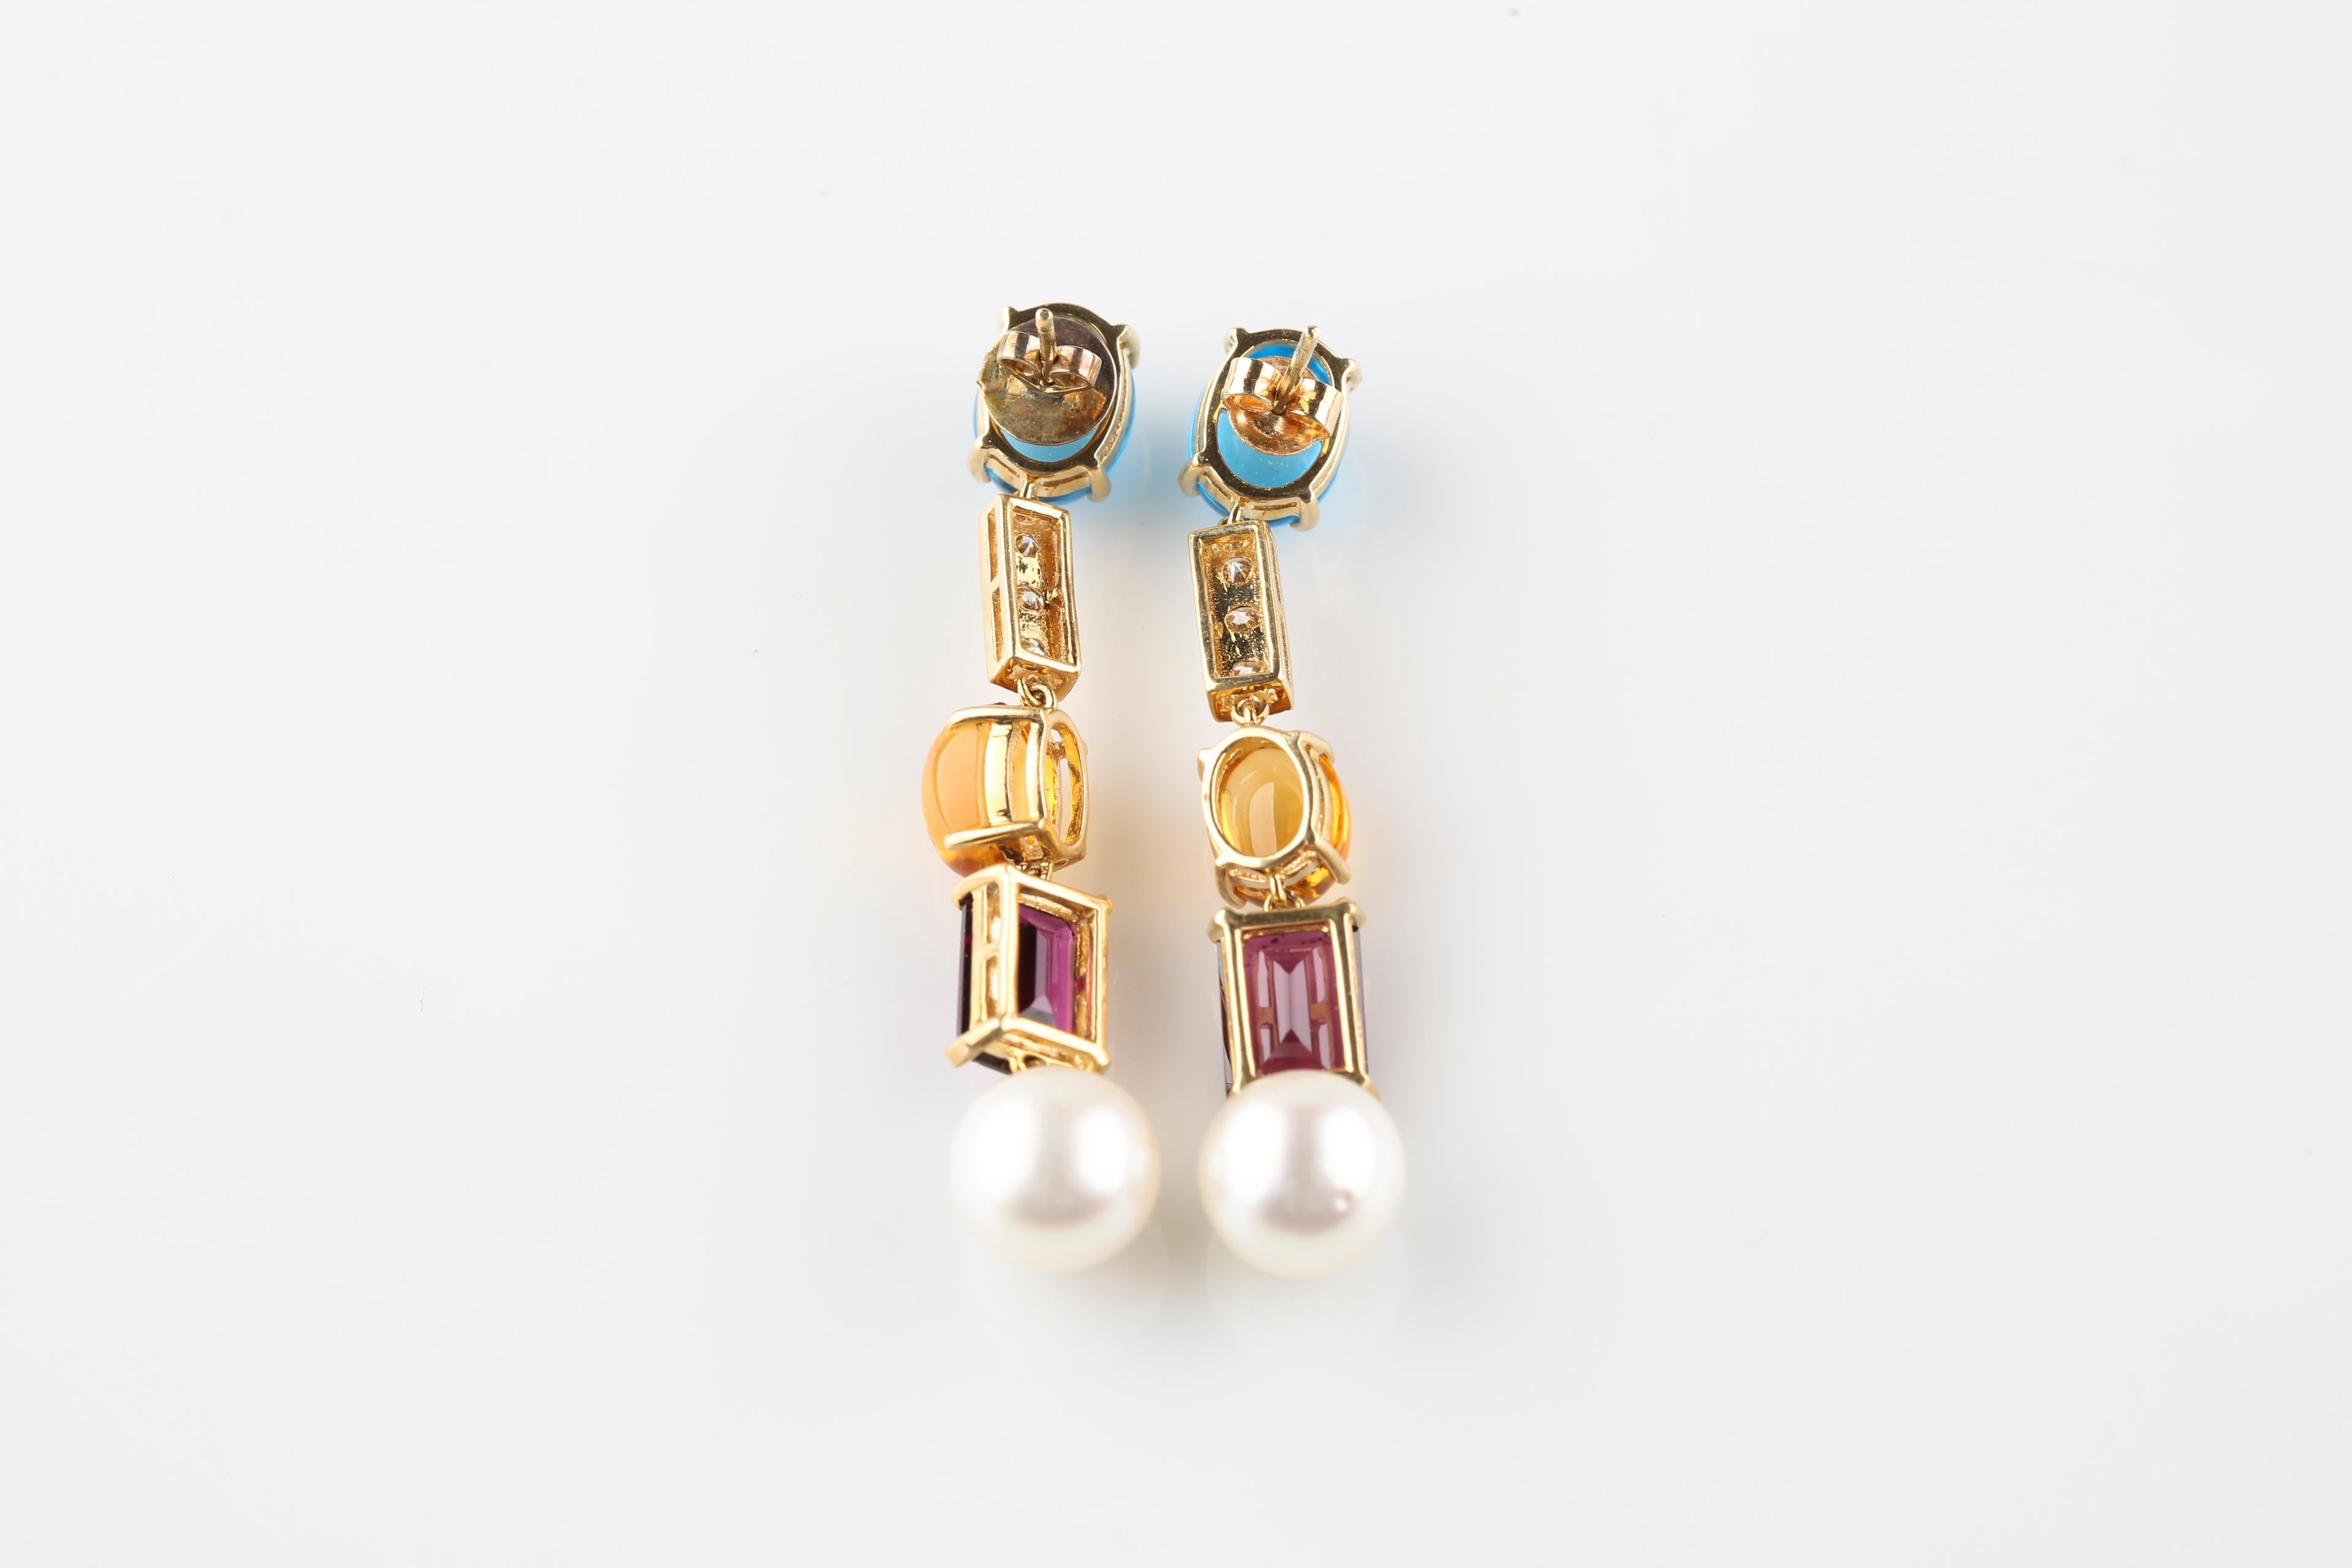 gold pearl and diamond drop earrings -china -b2b -forum -blog -wikipedia -.cn -.gov -alibaba